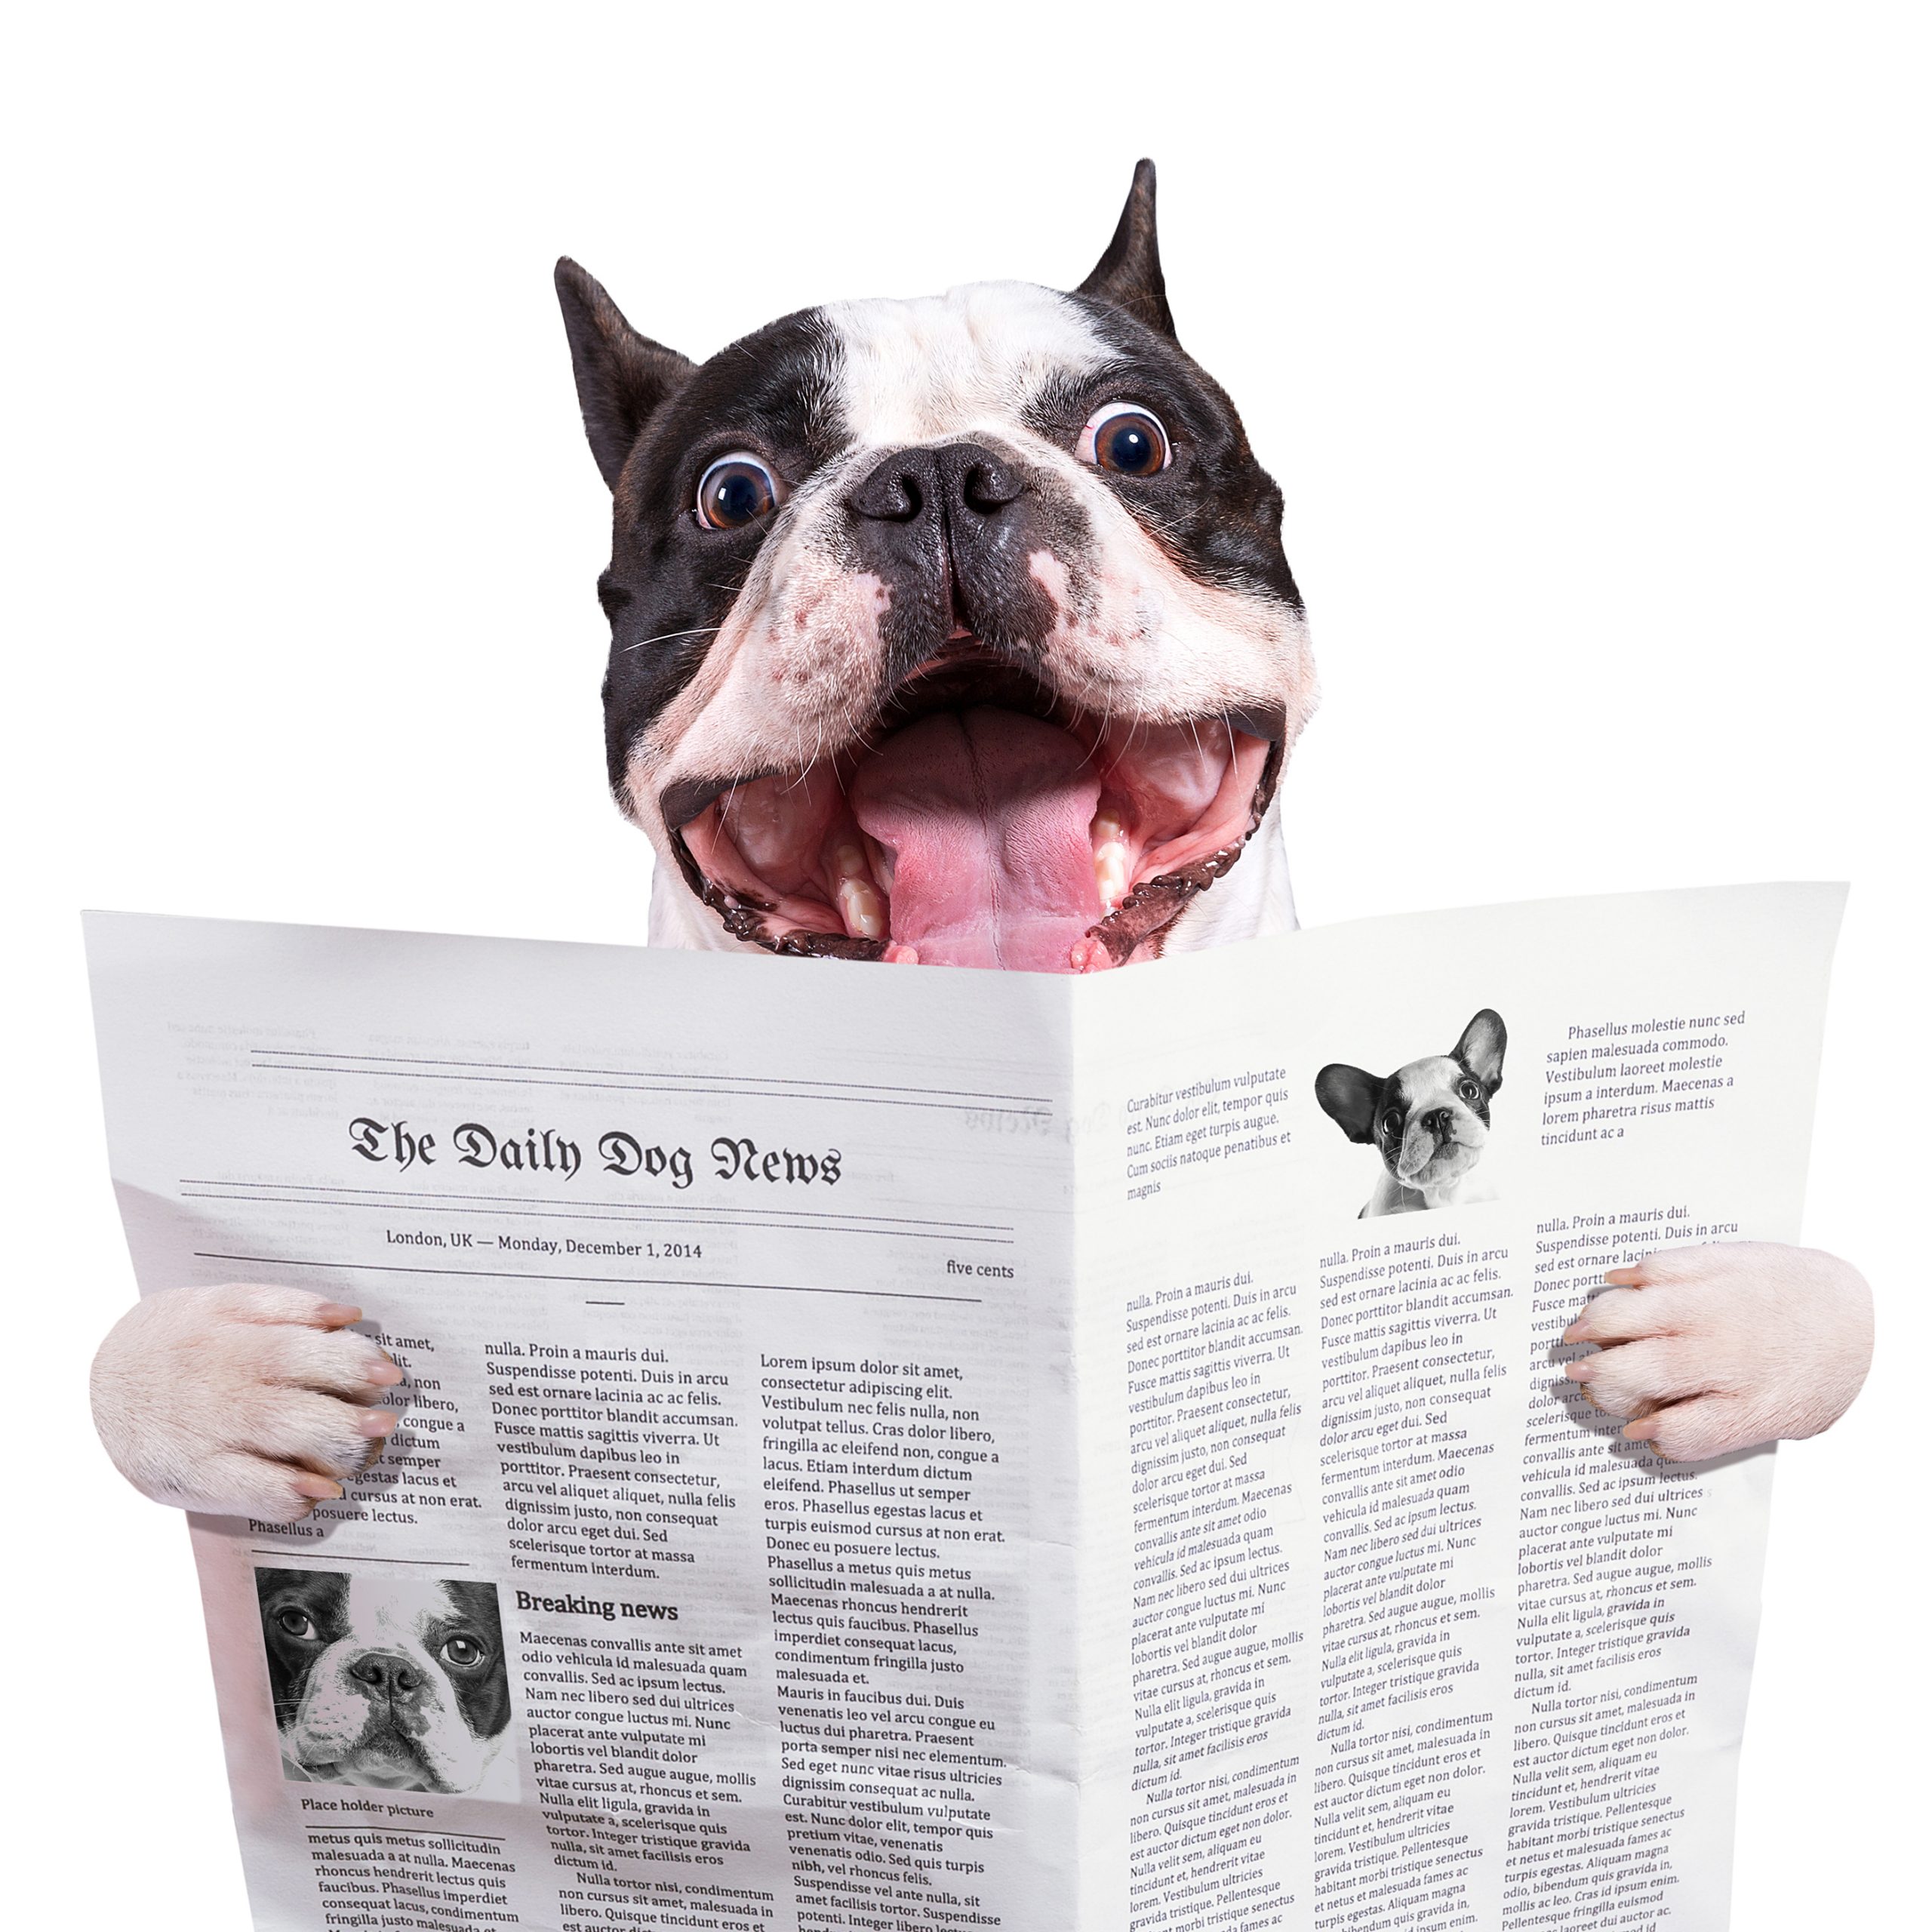 https://depositphotos.com/58643025/stock-photo-funny-french-bulldog-reading-newspaper.html